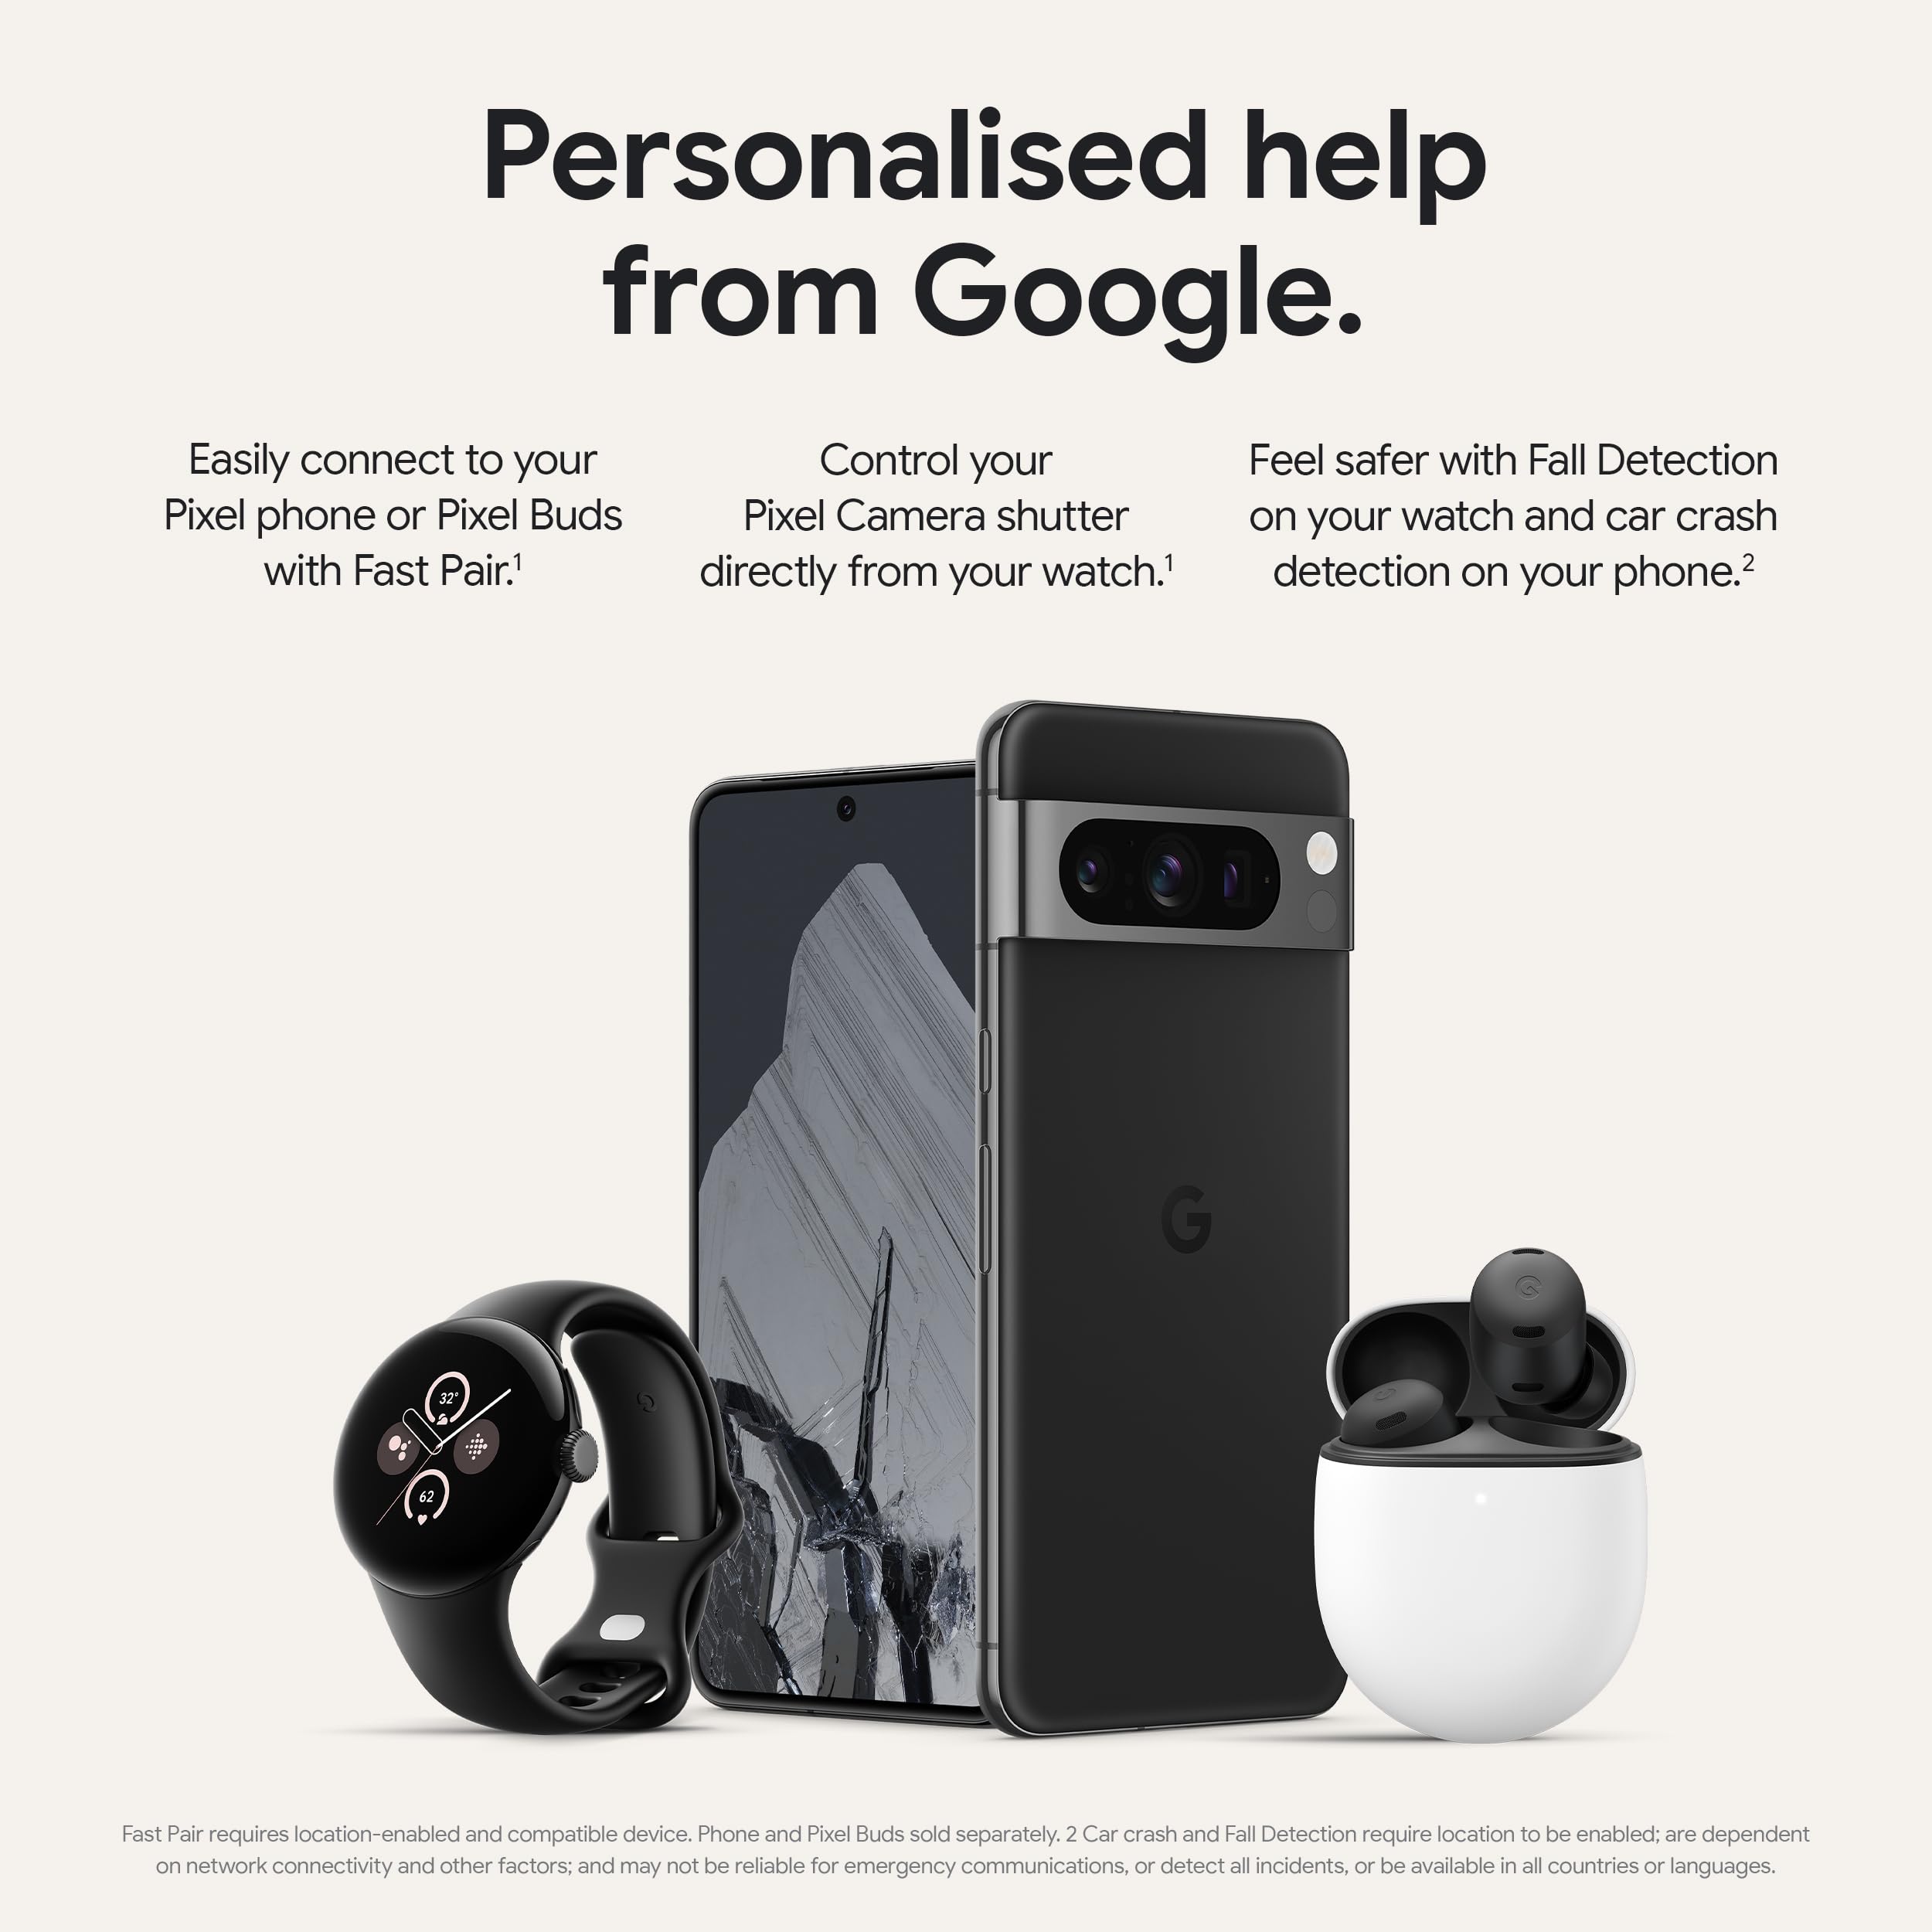 Google Google Pixel Watch 2 Matte Black Aluminum Case / Obsidian Active Band (Wifi) GA05029-GB